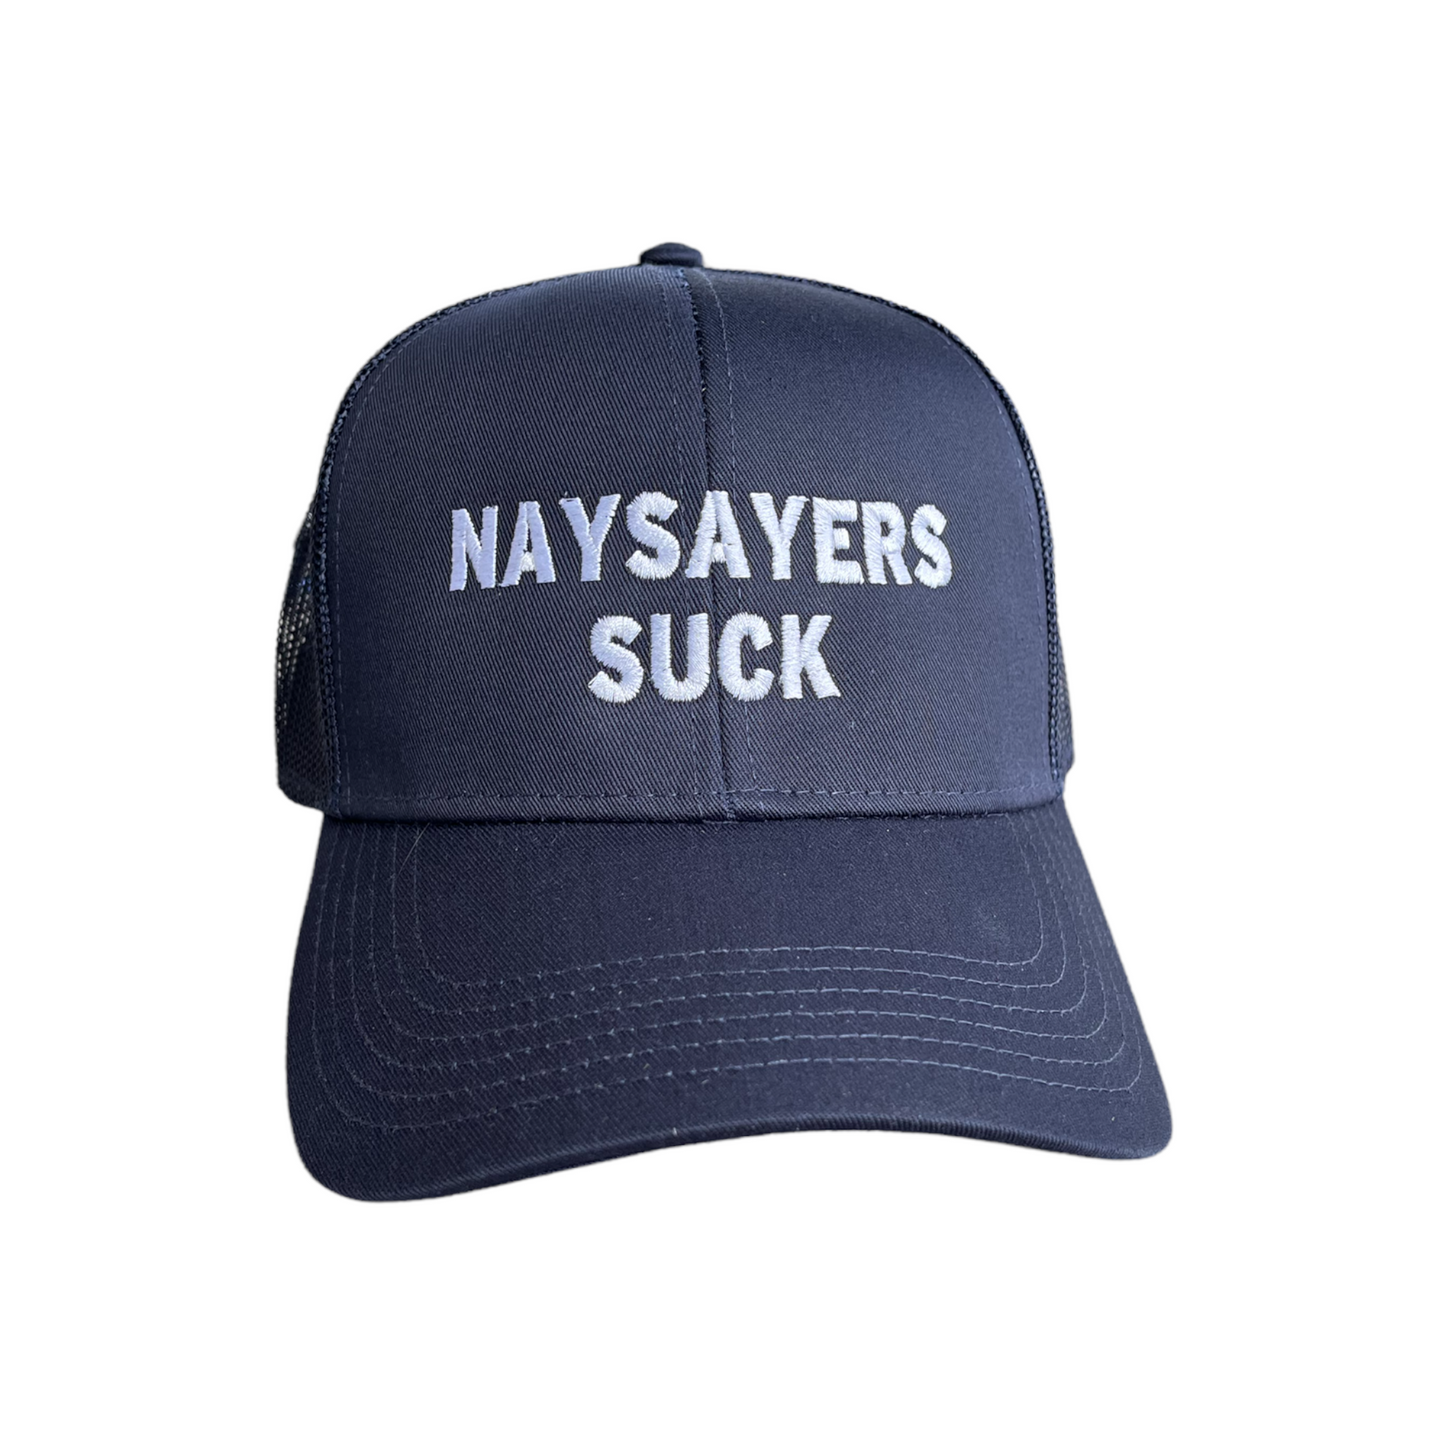 Naysayers Suck Cap